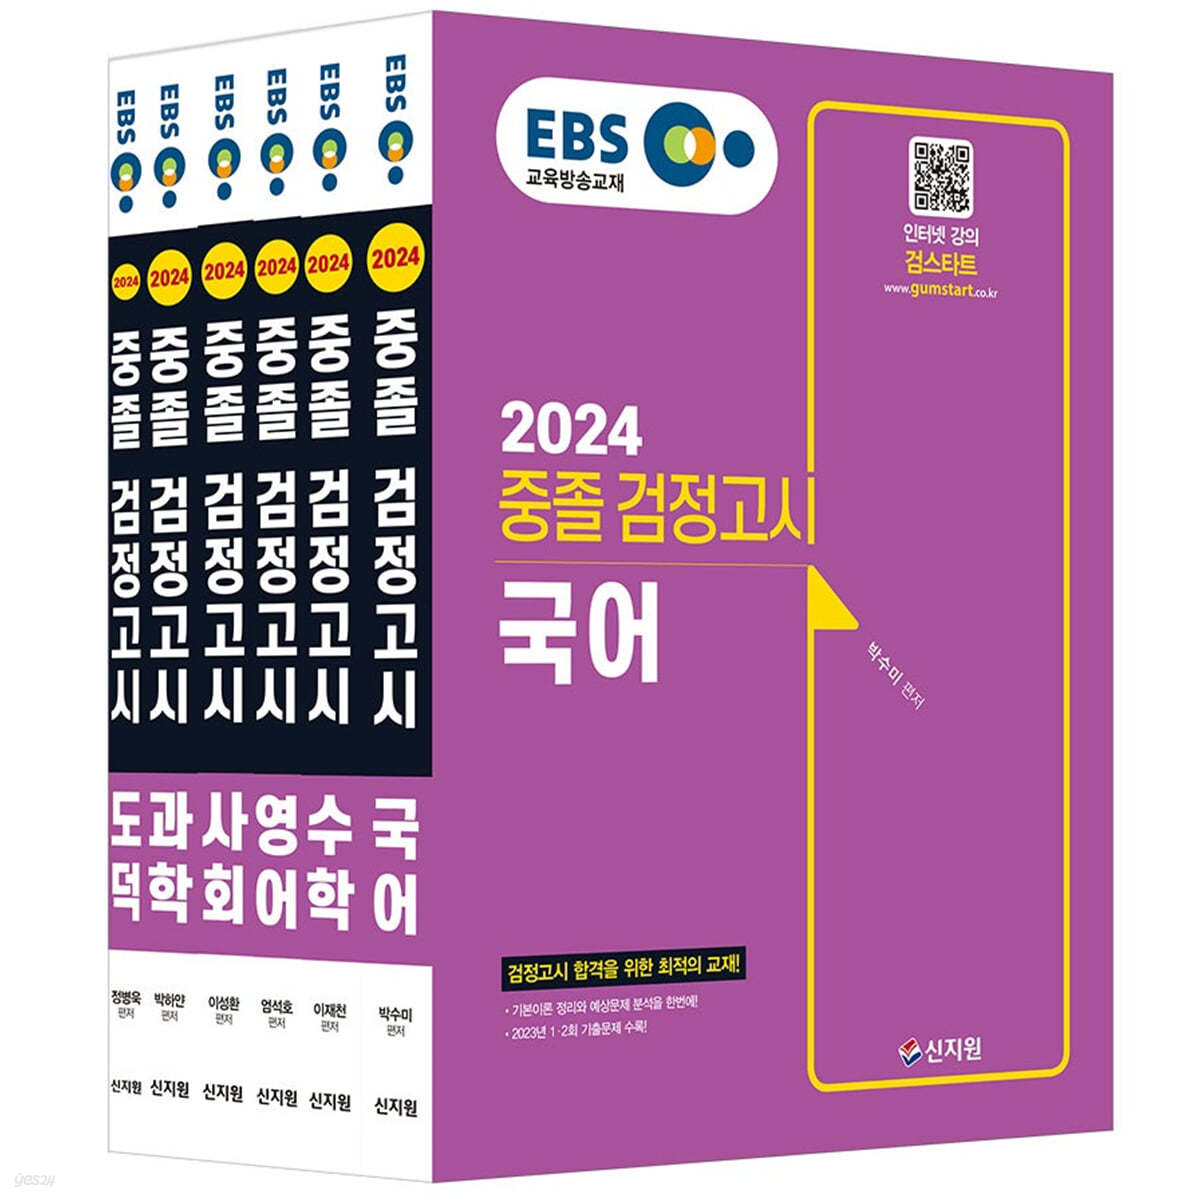 2024 EBS 중졸 검정고시 6종 세트